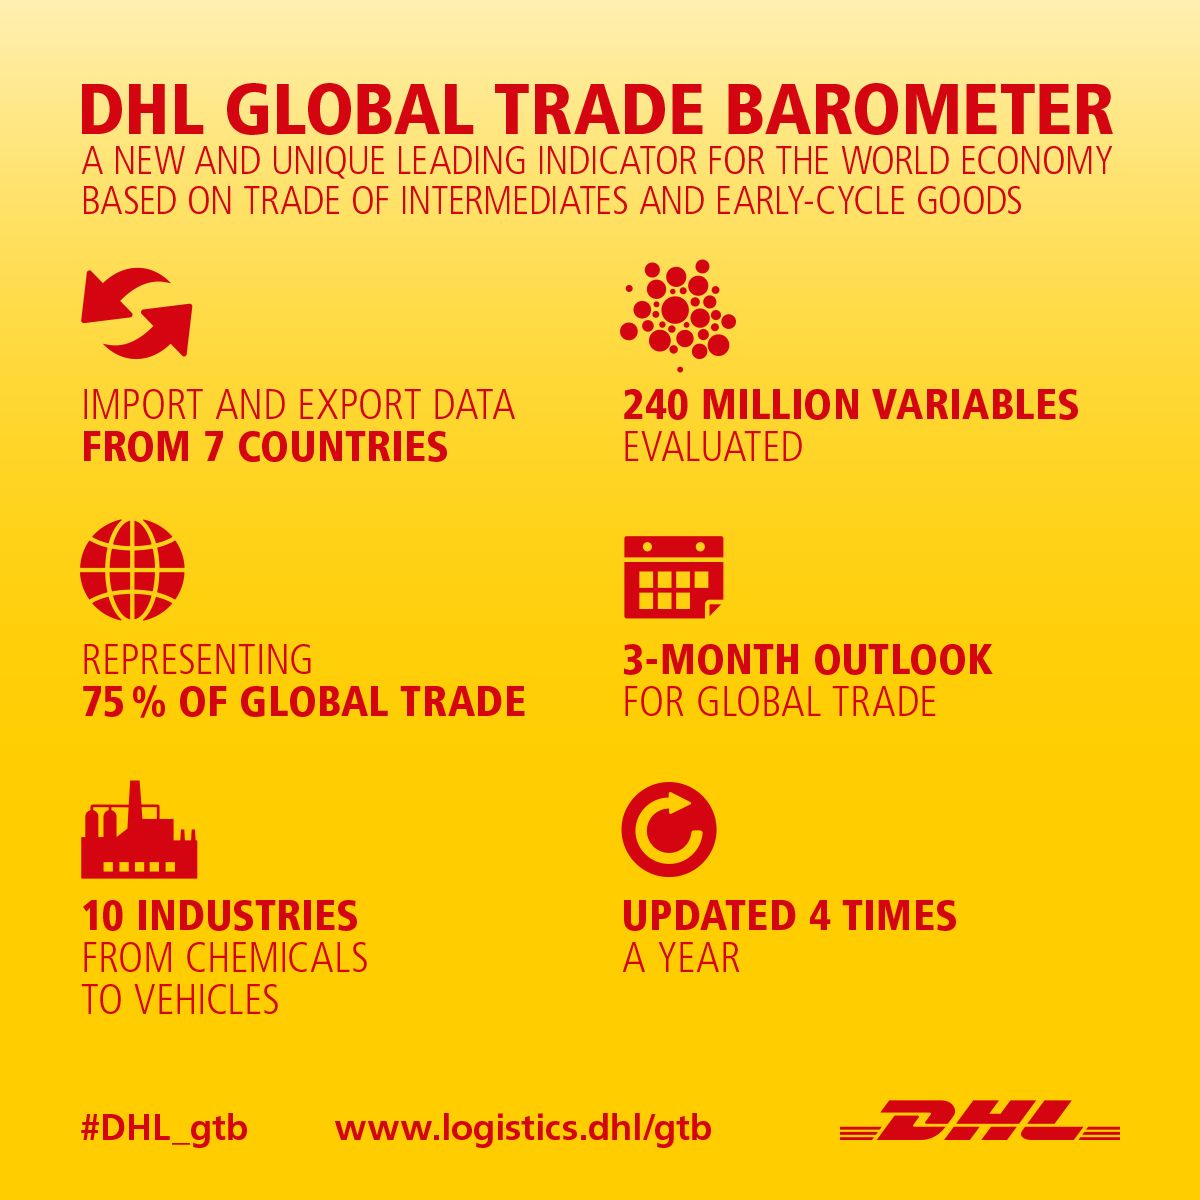 dhl-global-trade-barometer-overview